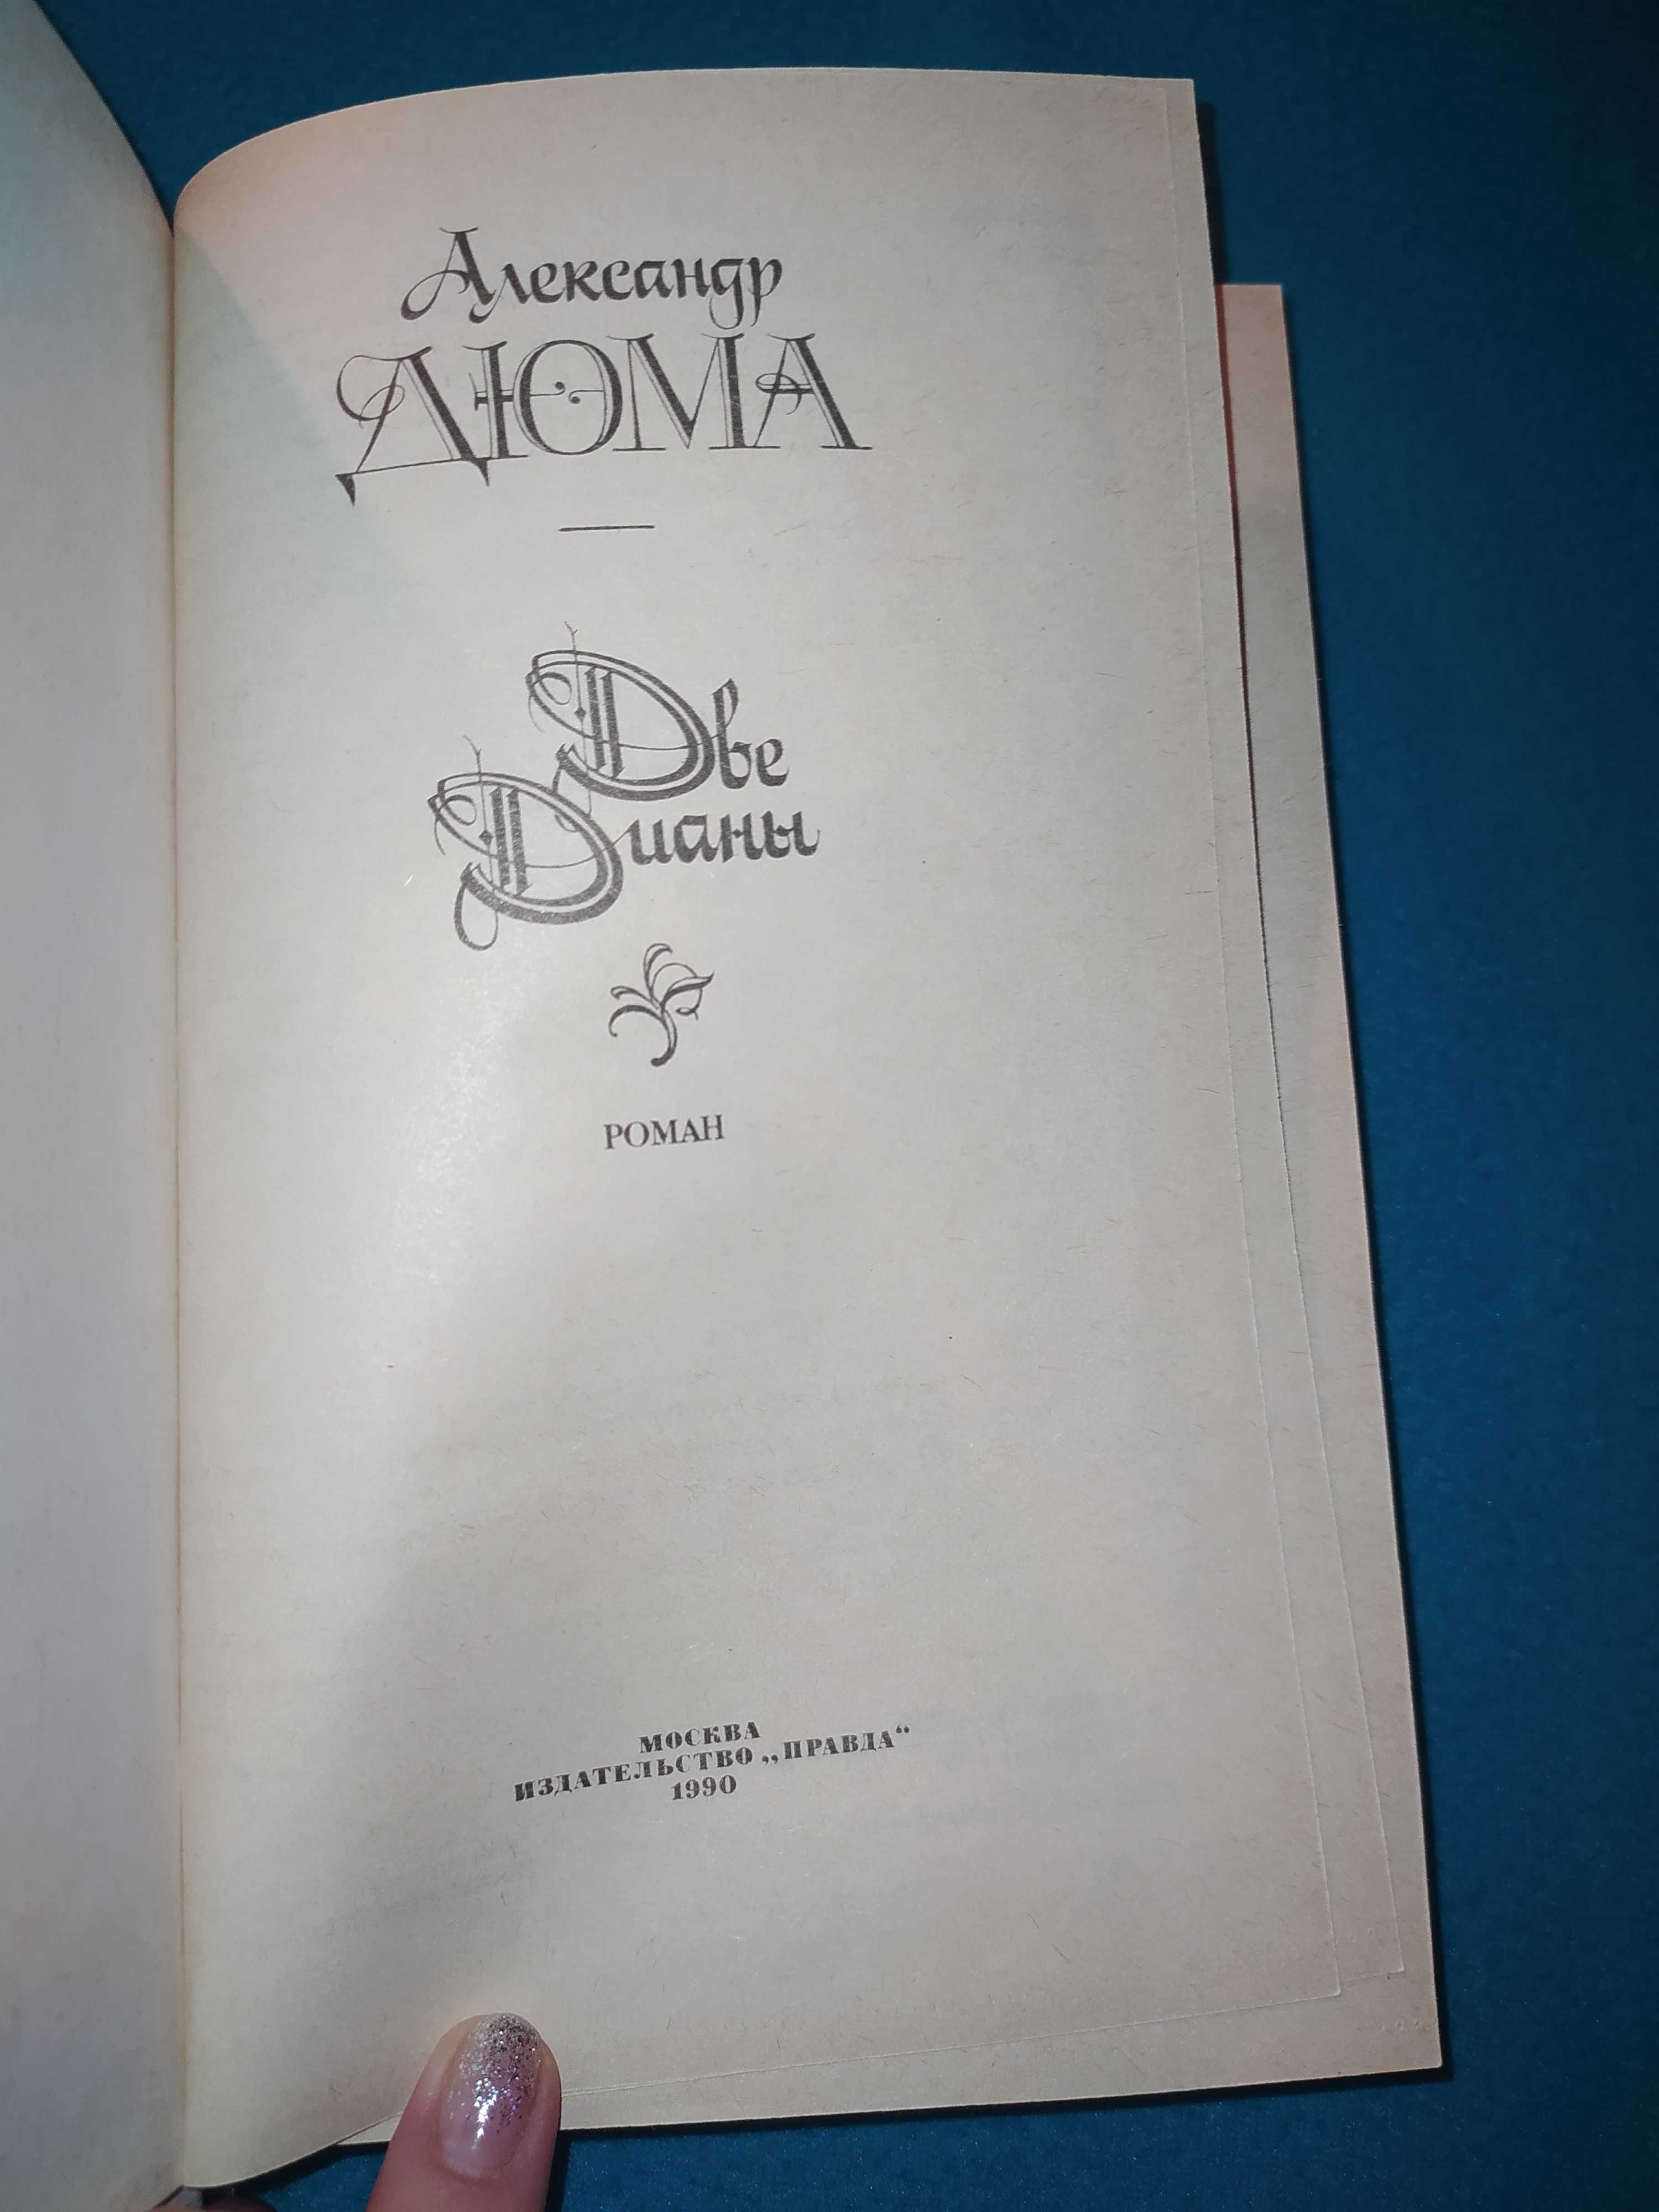 Книга.Книги.А.Дюма«ДВЕ ДИАНЫ»,«Ожерелье королевы»